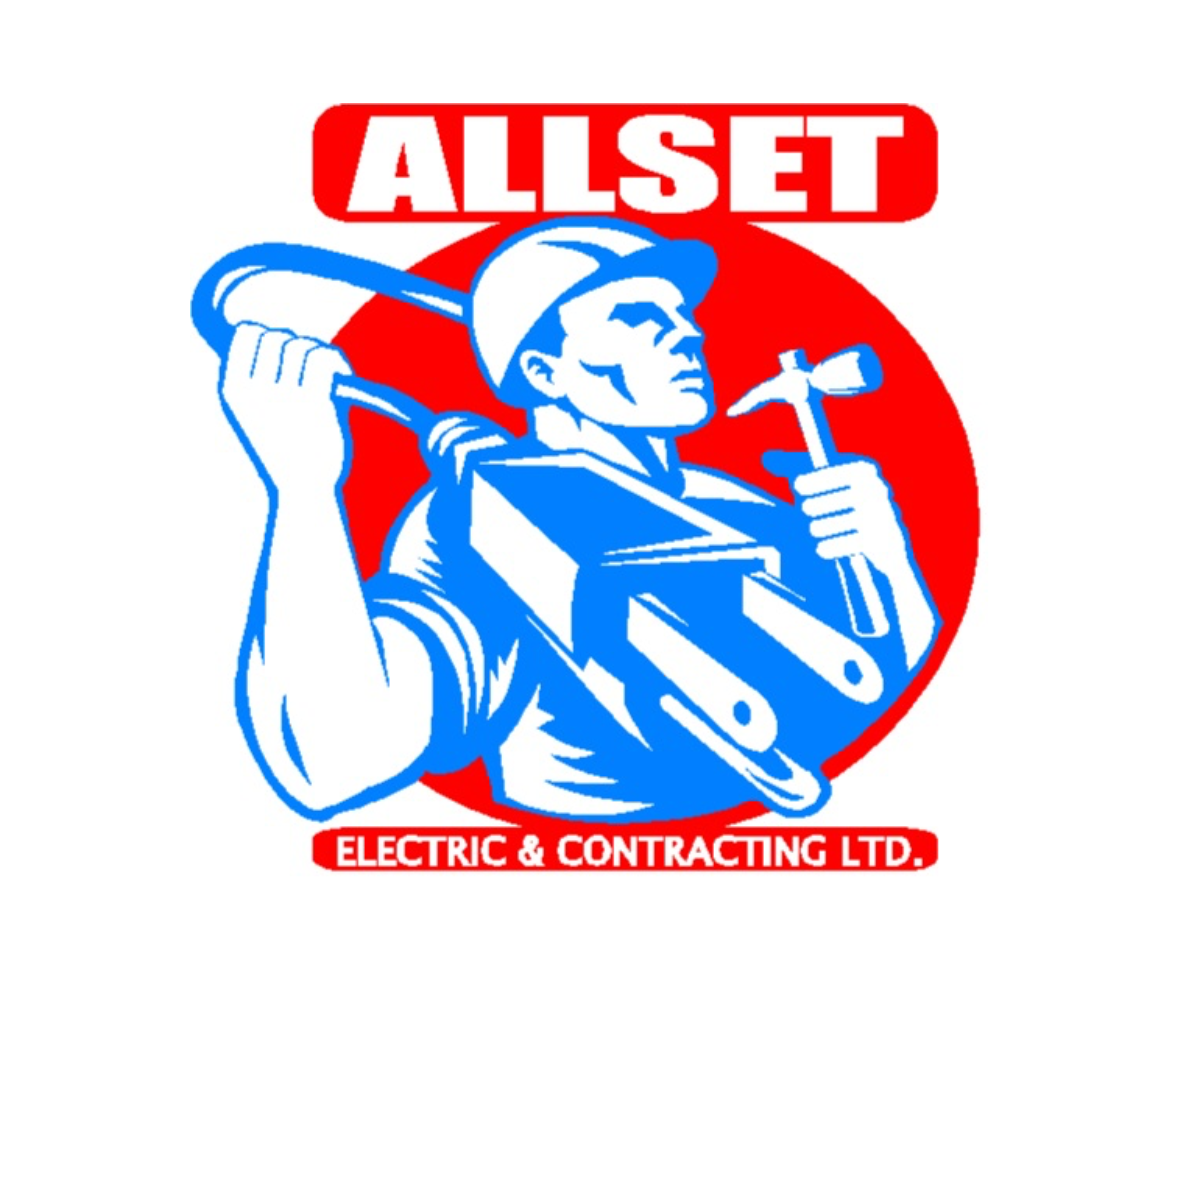 Allset Electric